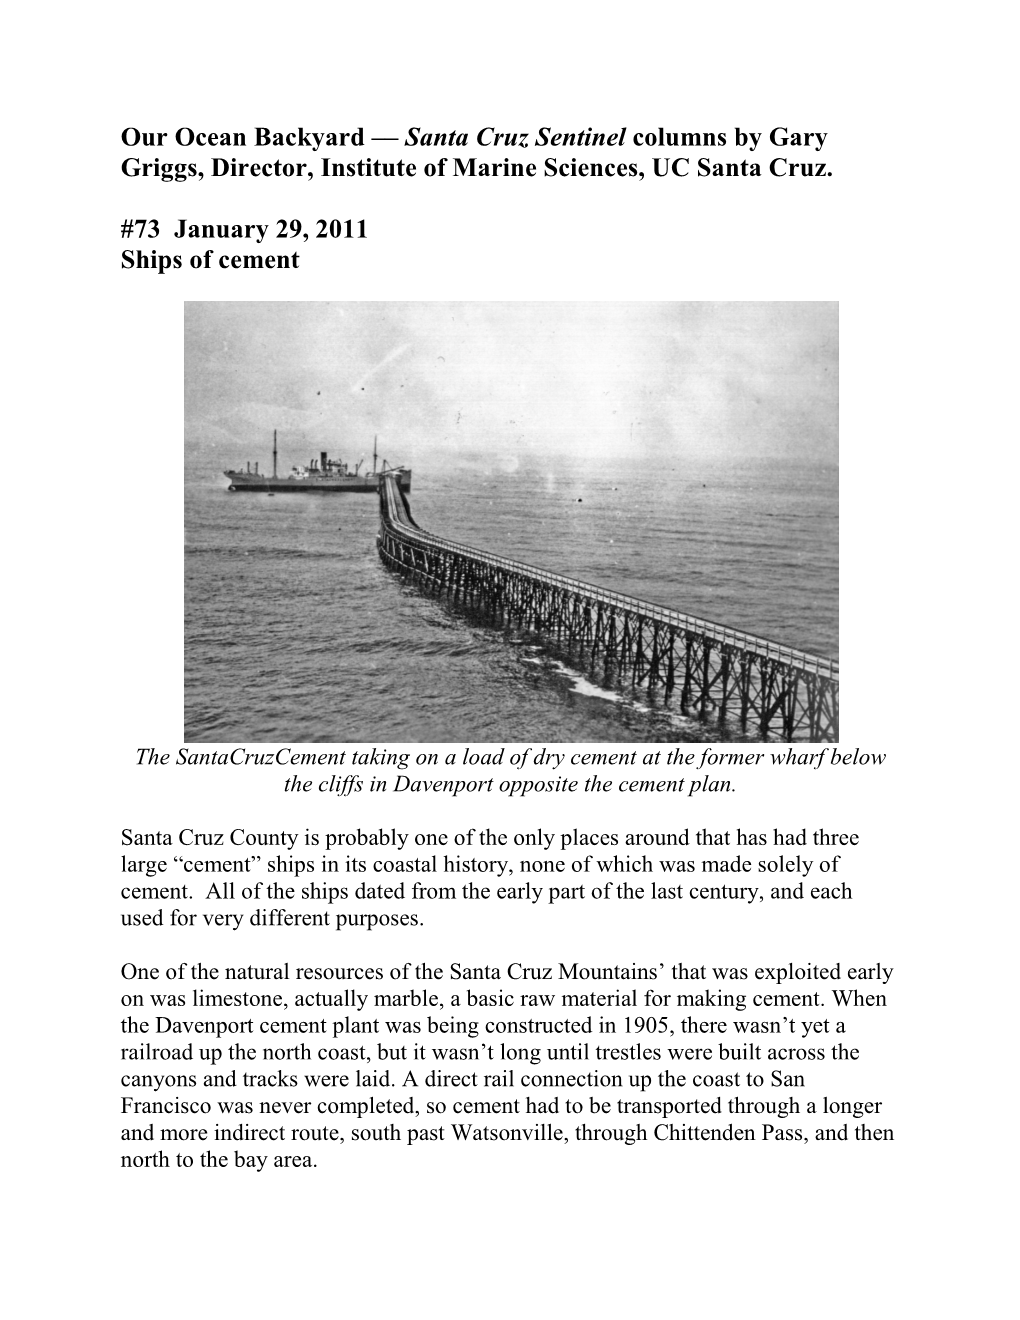 Santa Cruz Sentinel Columns by Gary Griggs, Director, Institute of Marine Sciences, UC Santa Cruz